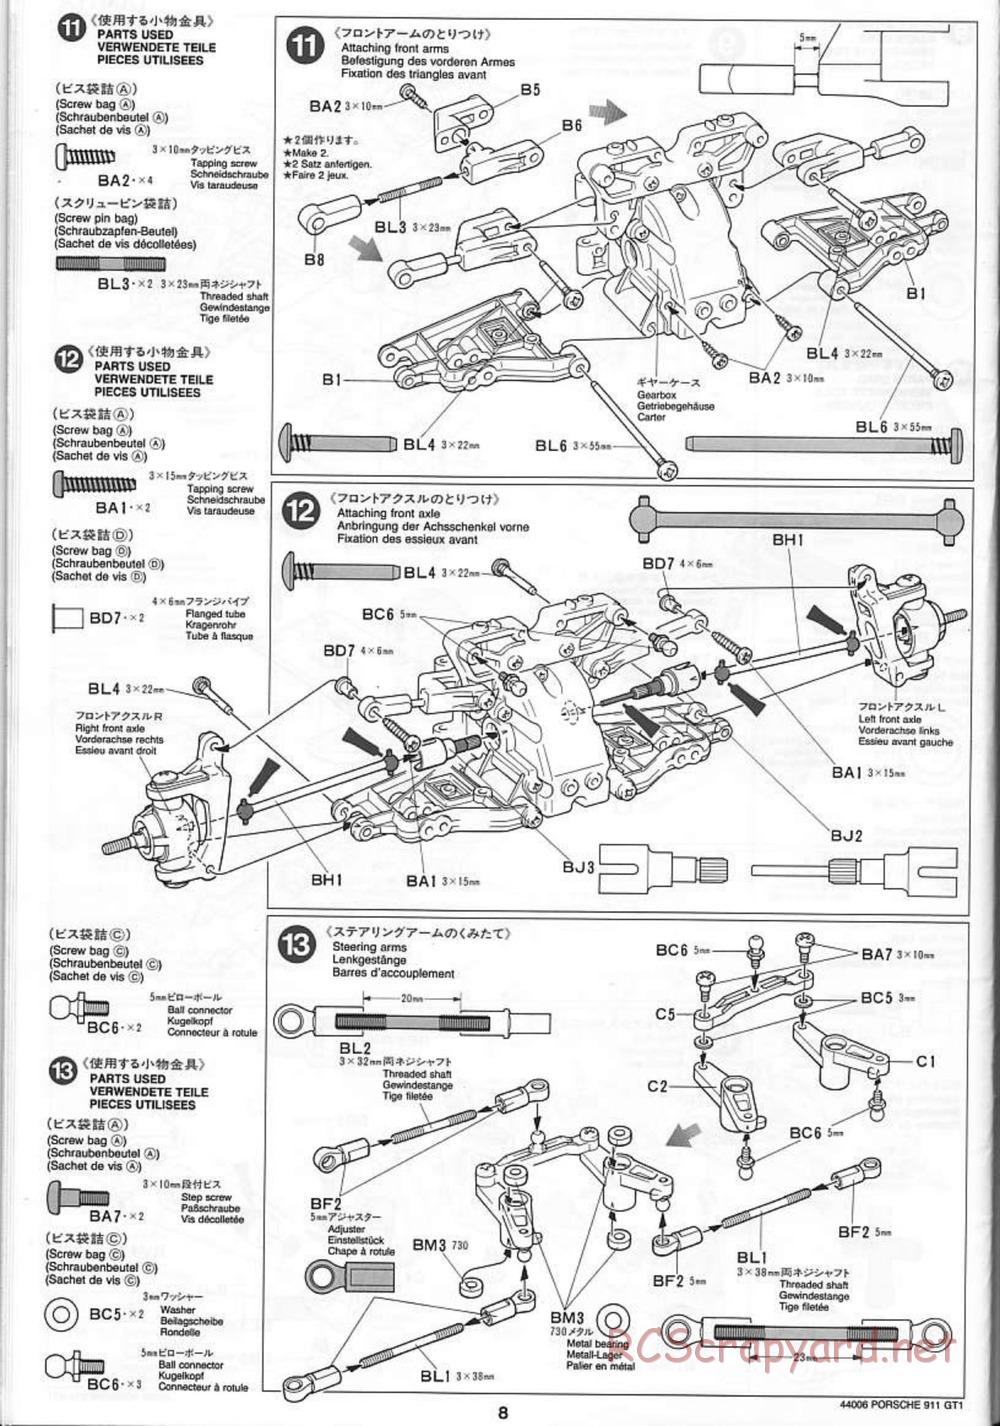 Tamiya - Porsche 911 GT1 - TGX Mk.1 Chassis - Manual - Page 8